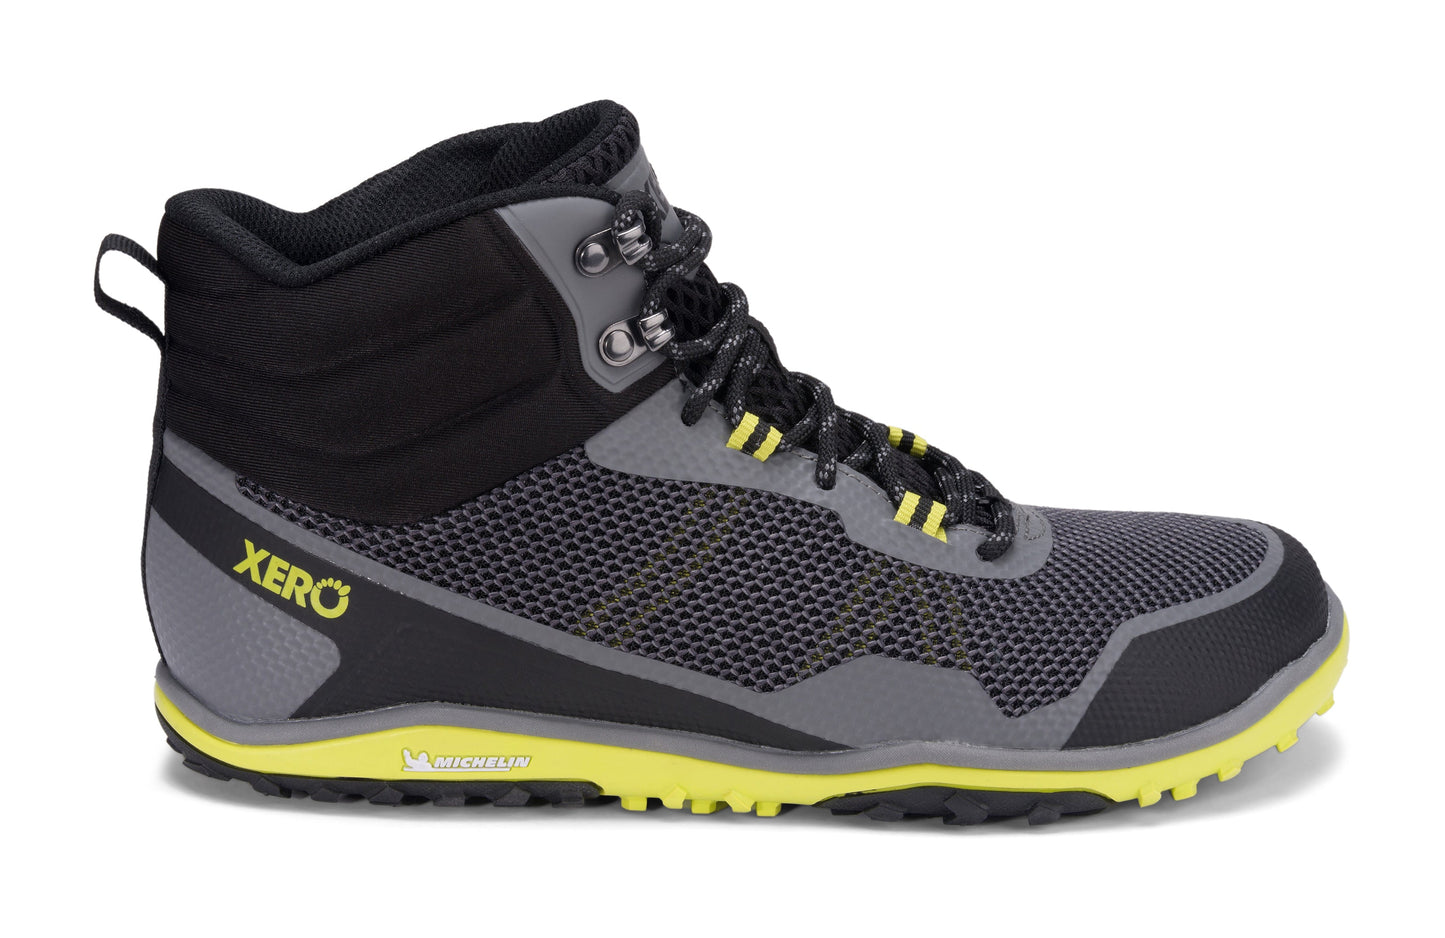 Xero Shoes Scrambler Mid Mens barfods lette vandrestøvler til mænd i farven steel gray / sulphur, yderside